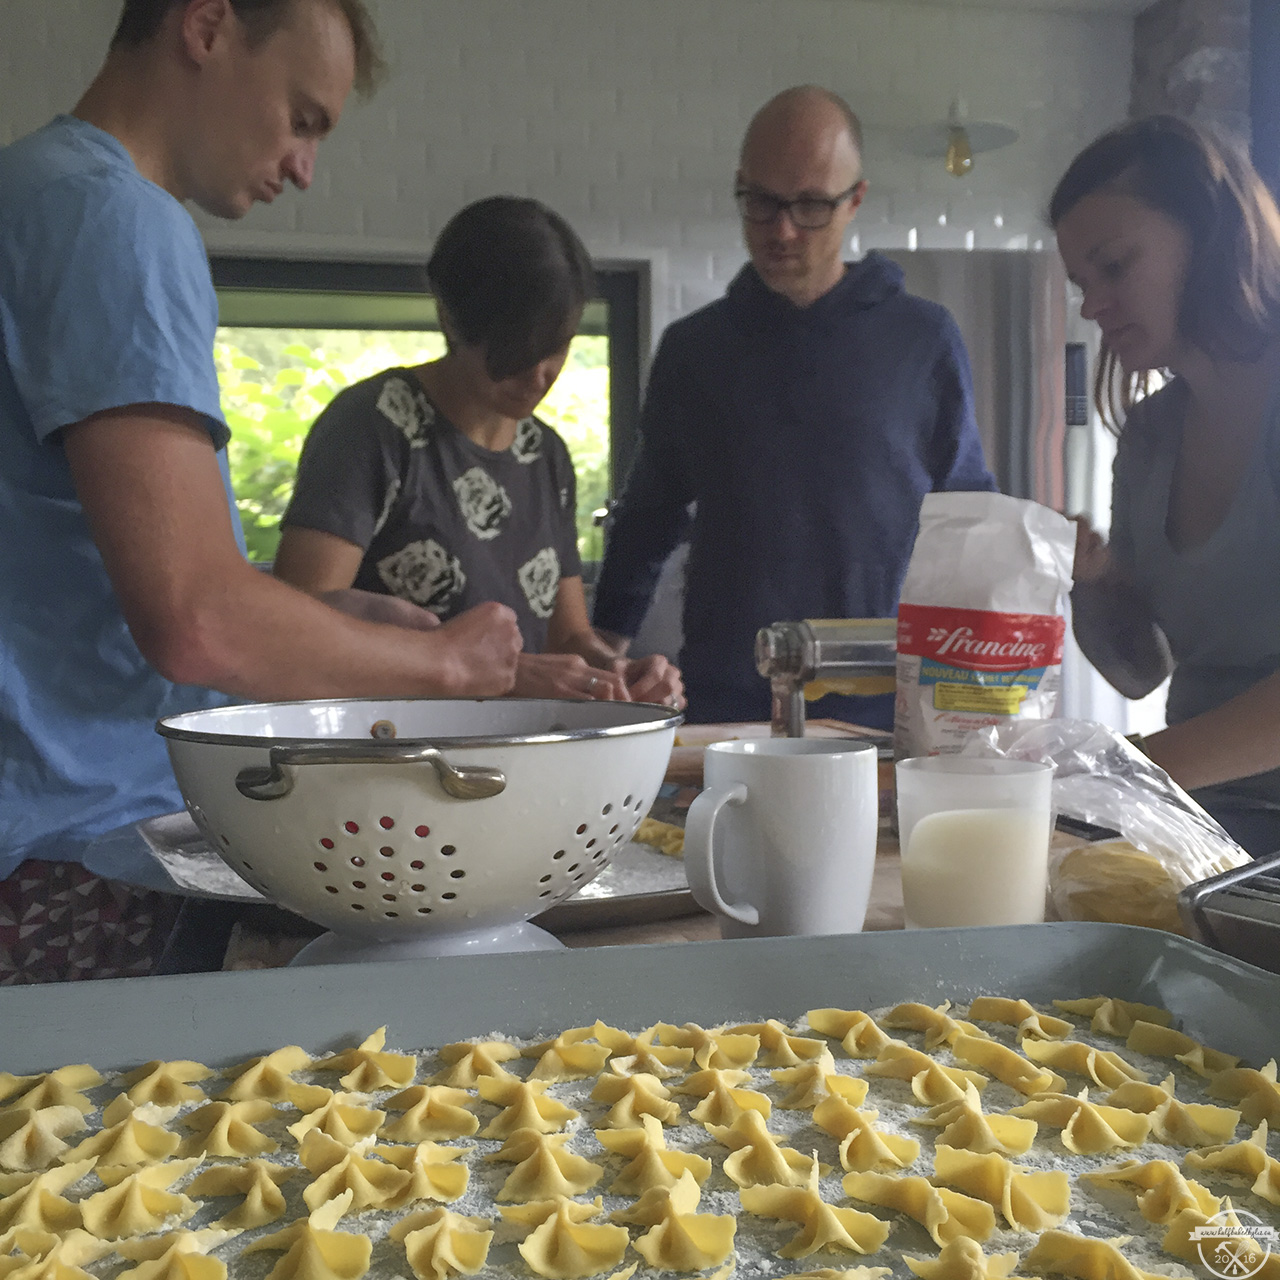 11-making-pasta-team-effort